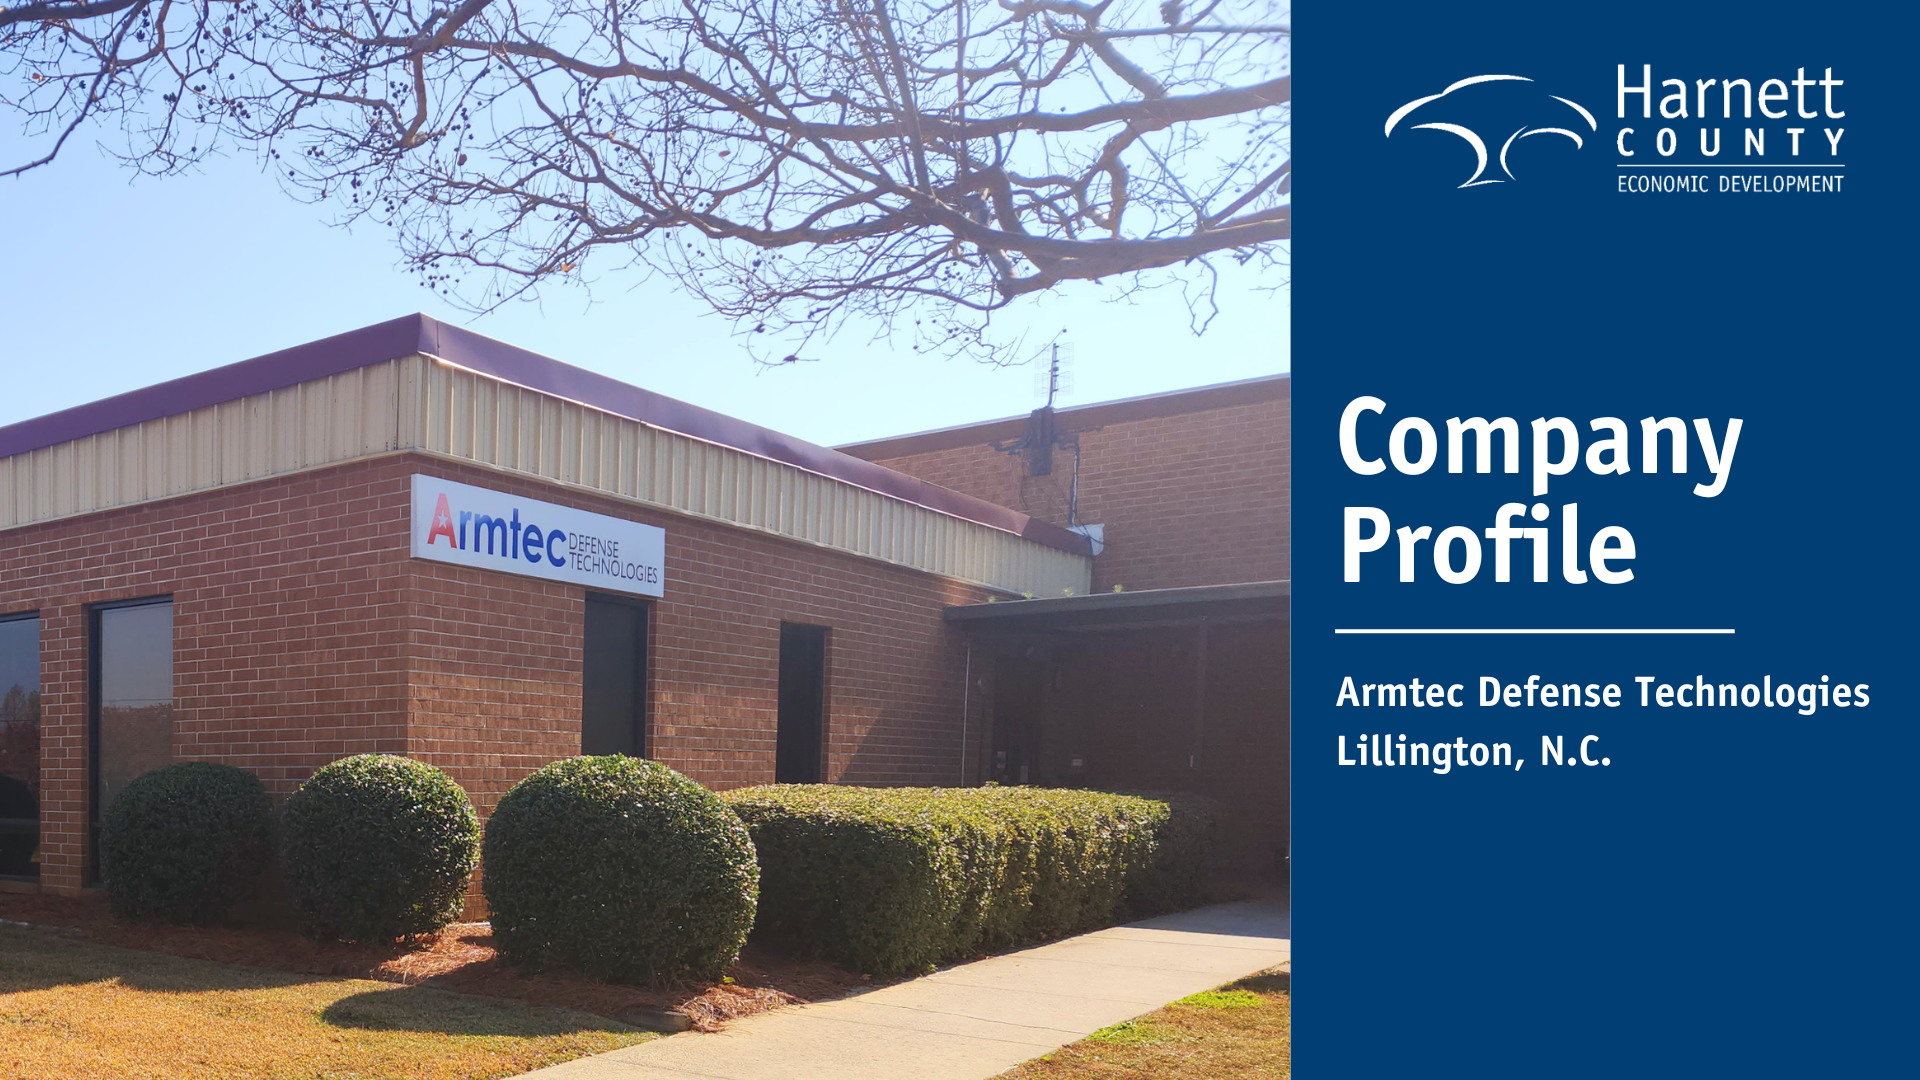 Harnett County Company Profile: Armtec Defense Technologies